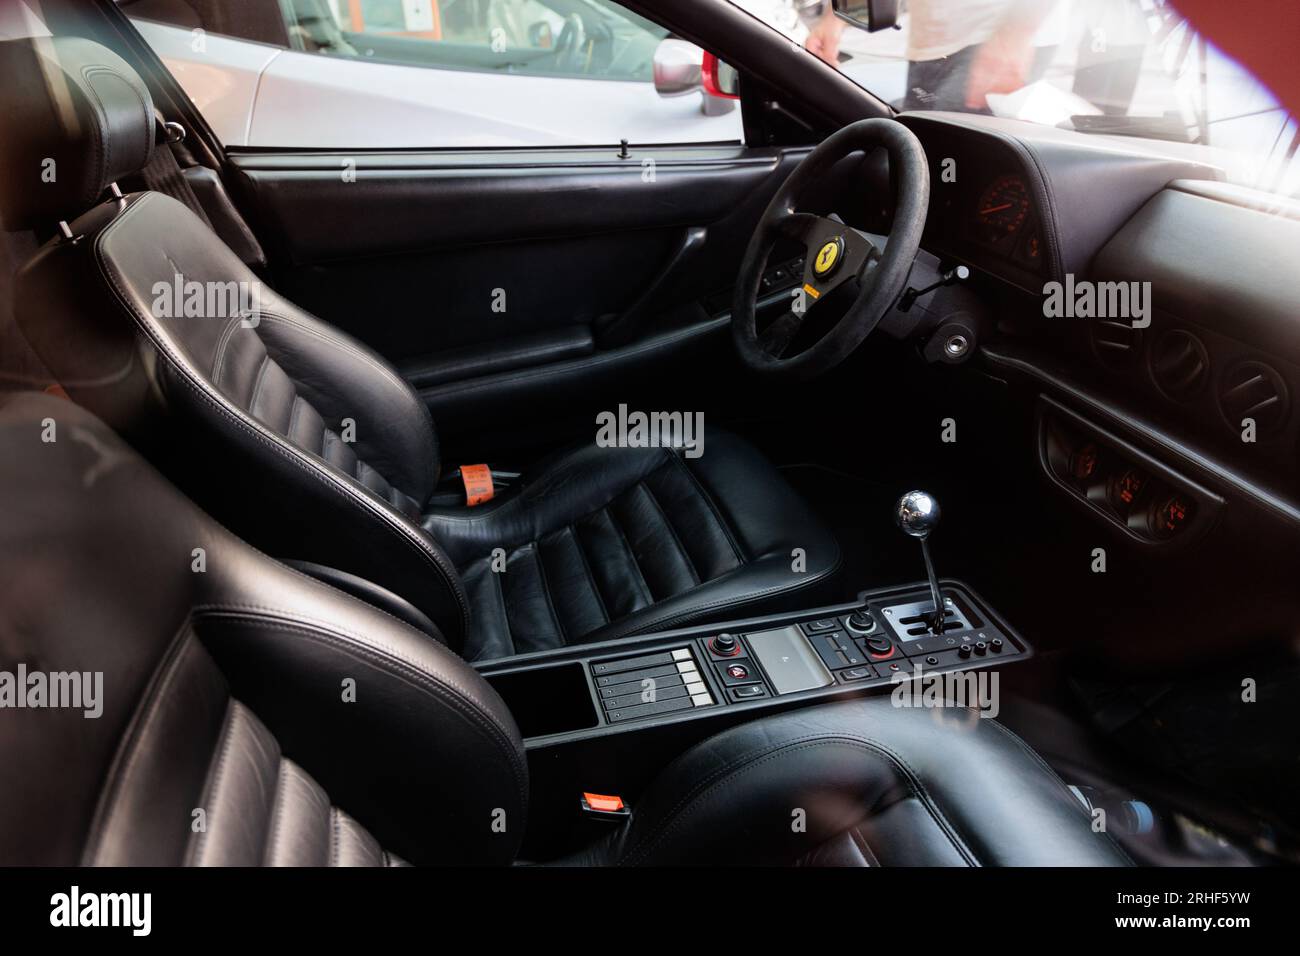 Ferrari Testarossa interior Stock Photo